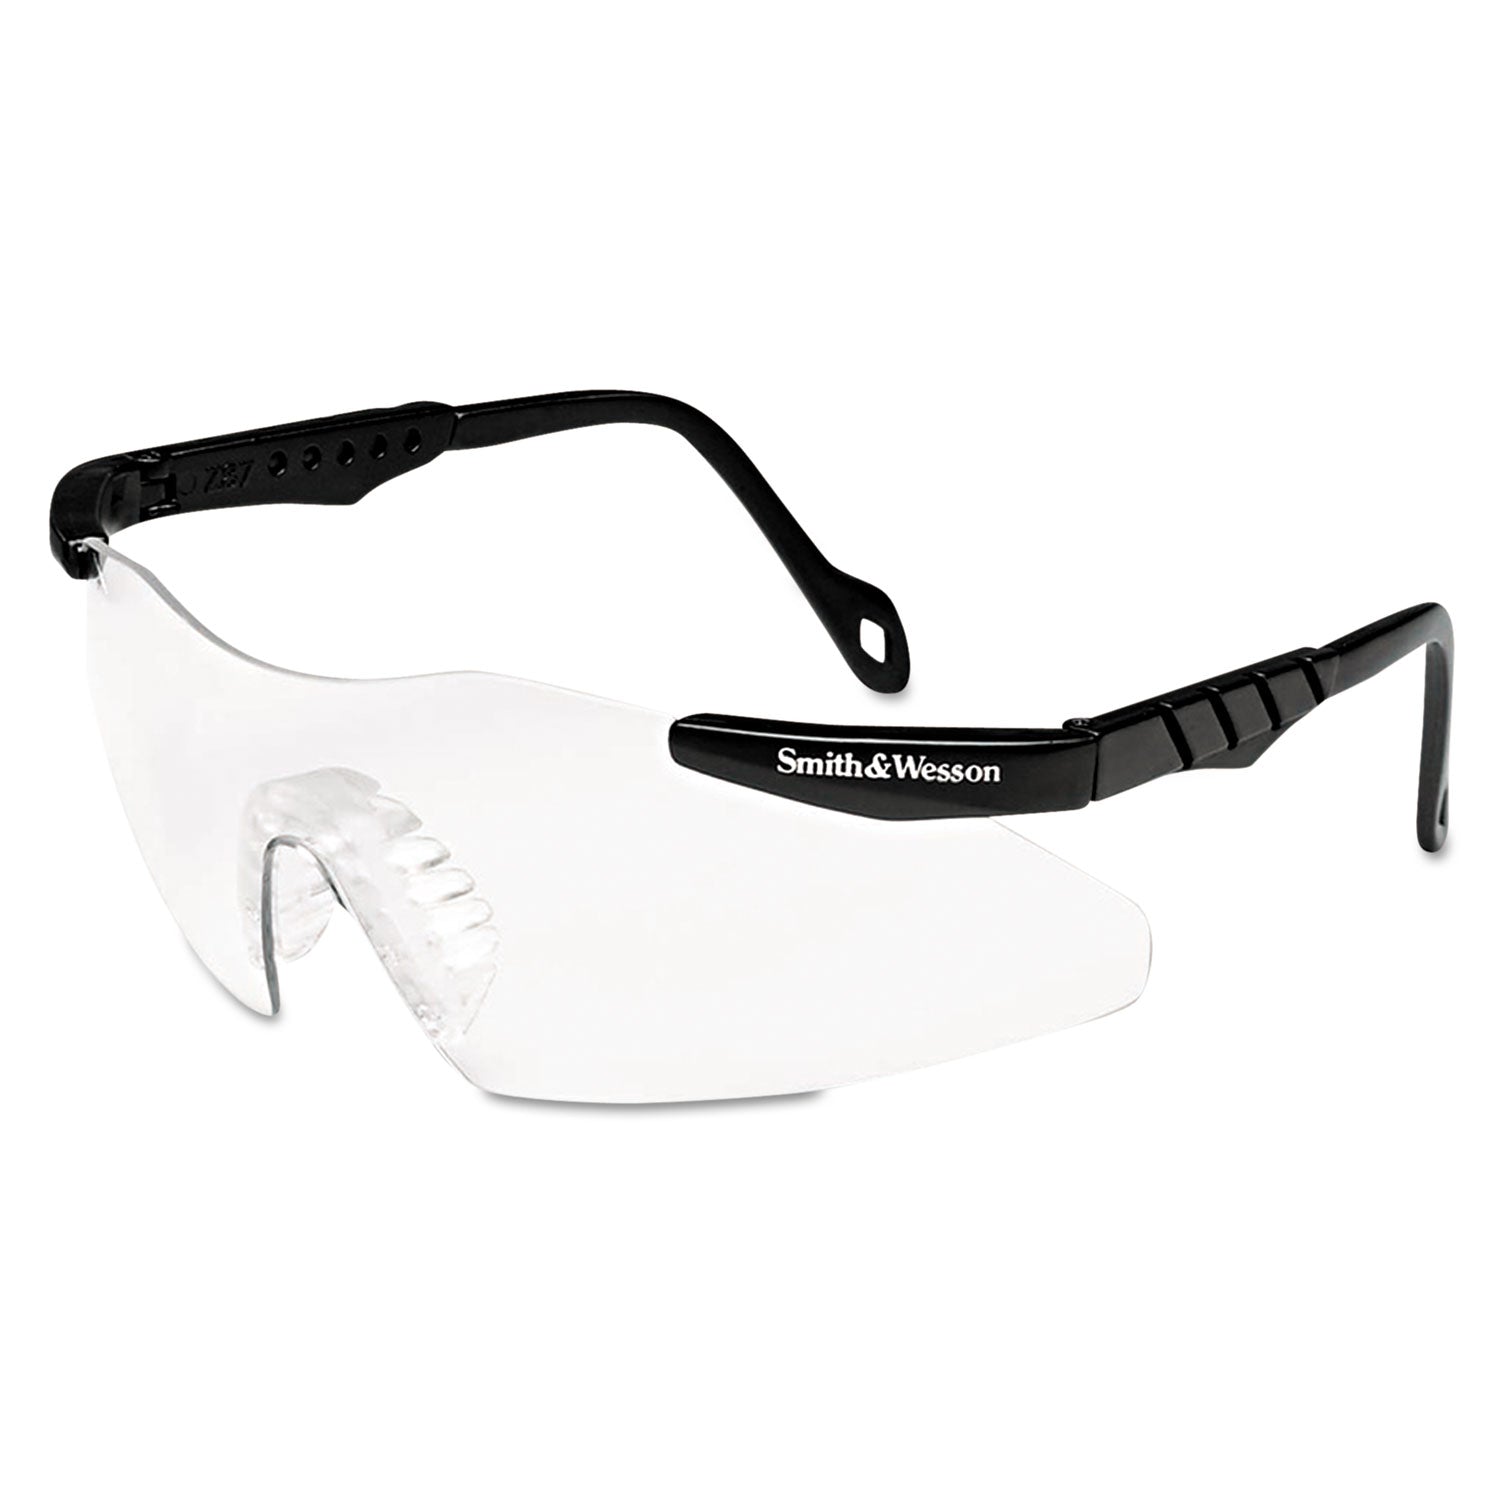 Magnum 3G Safety Eyewear, Black Frame, Clear Lens - 